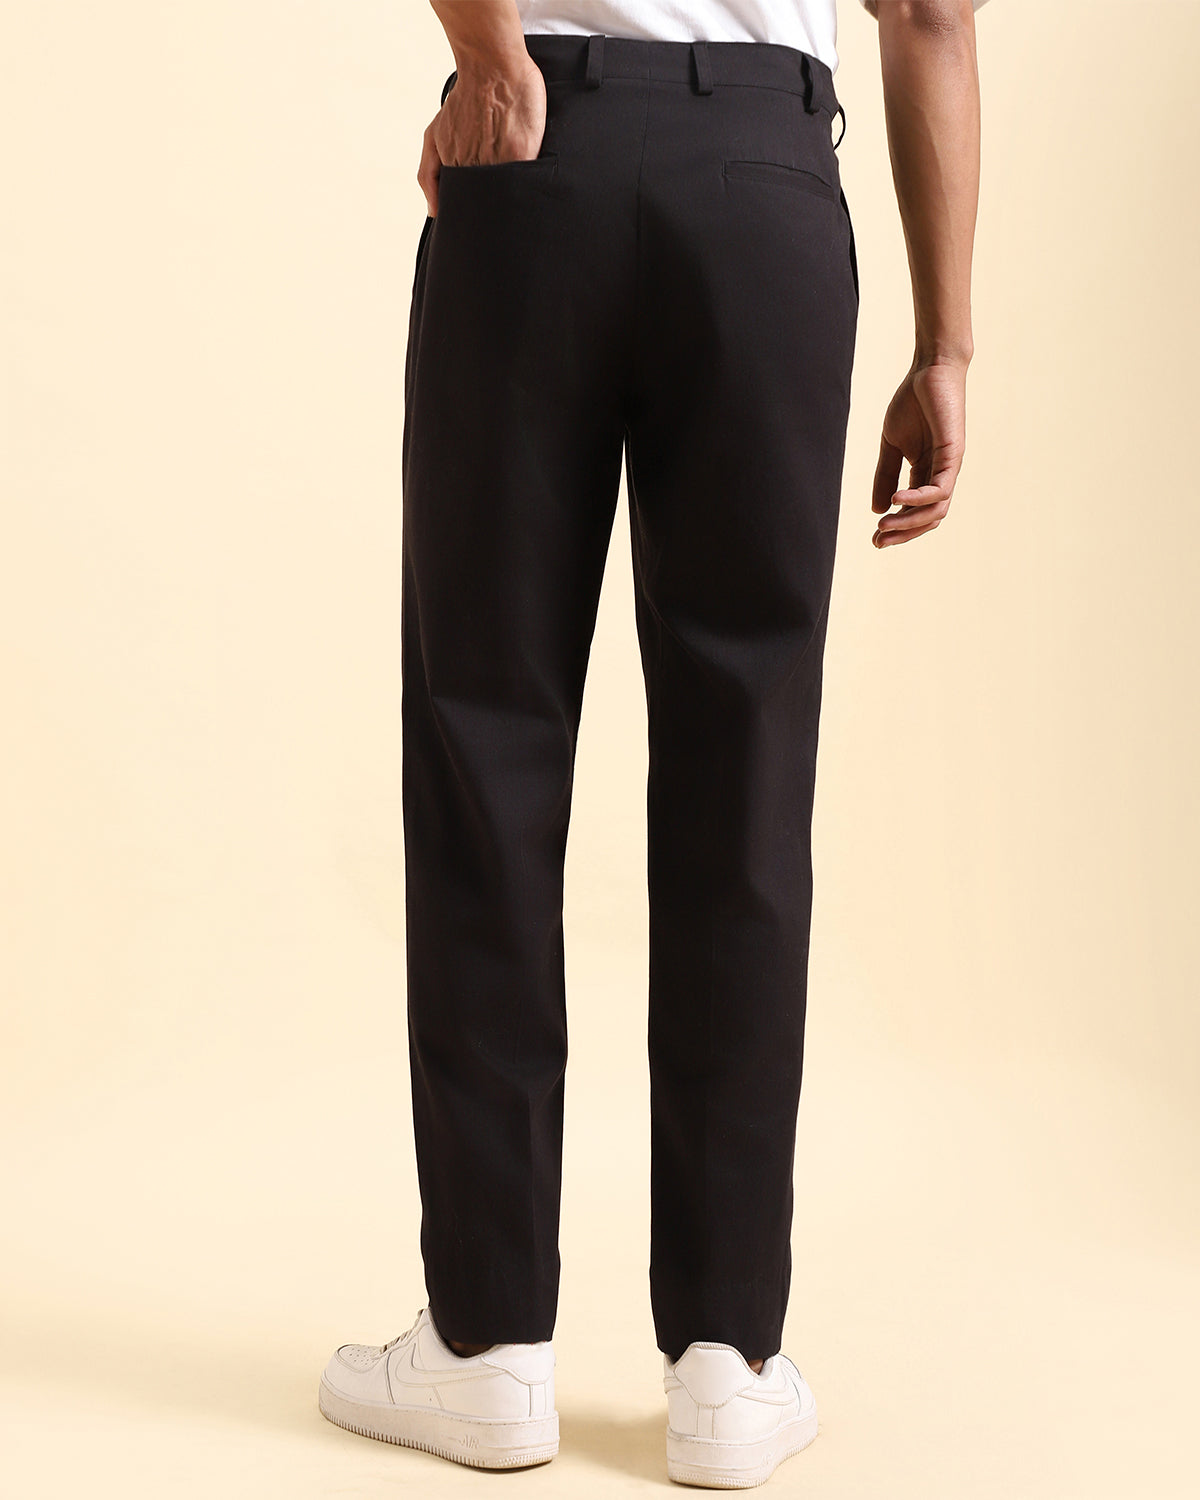 HBFAGFB Casual Pants for Men Slim Drawstring Pocket Pleated Trousers Mens  Hiking Pants Navy Size XL - Walmart.com